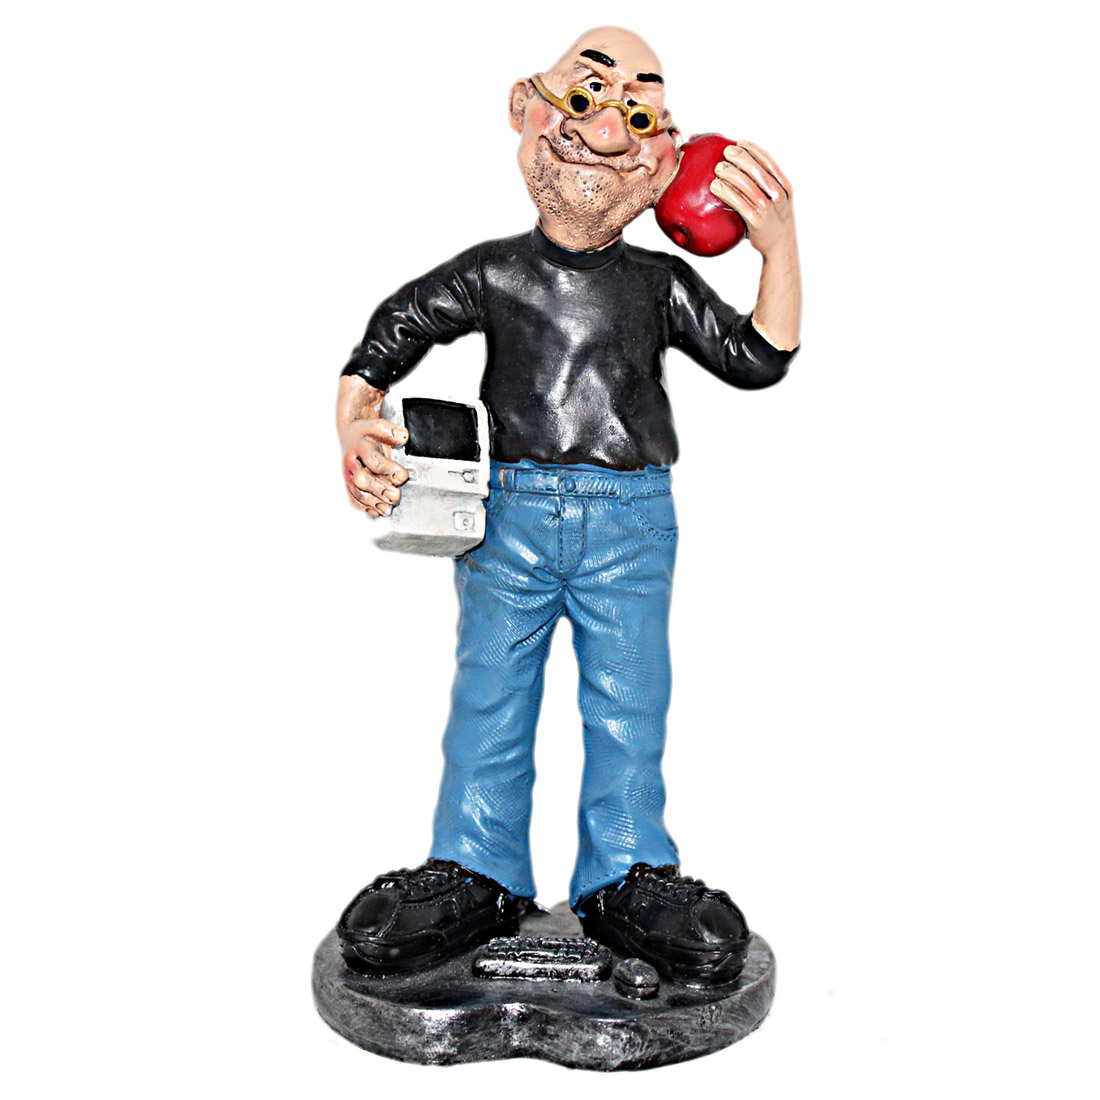 ORKA Decorative Showpiece Figurine - Steve Jobs